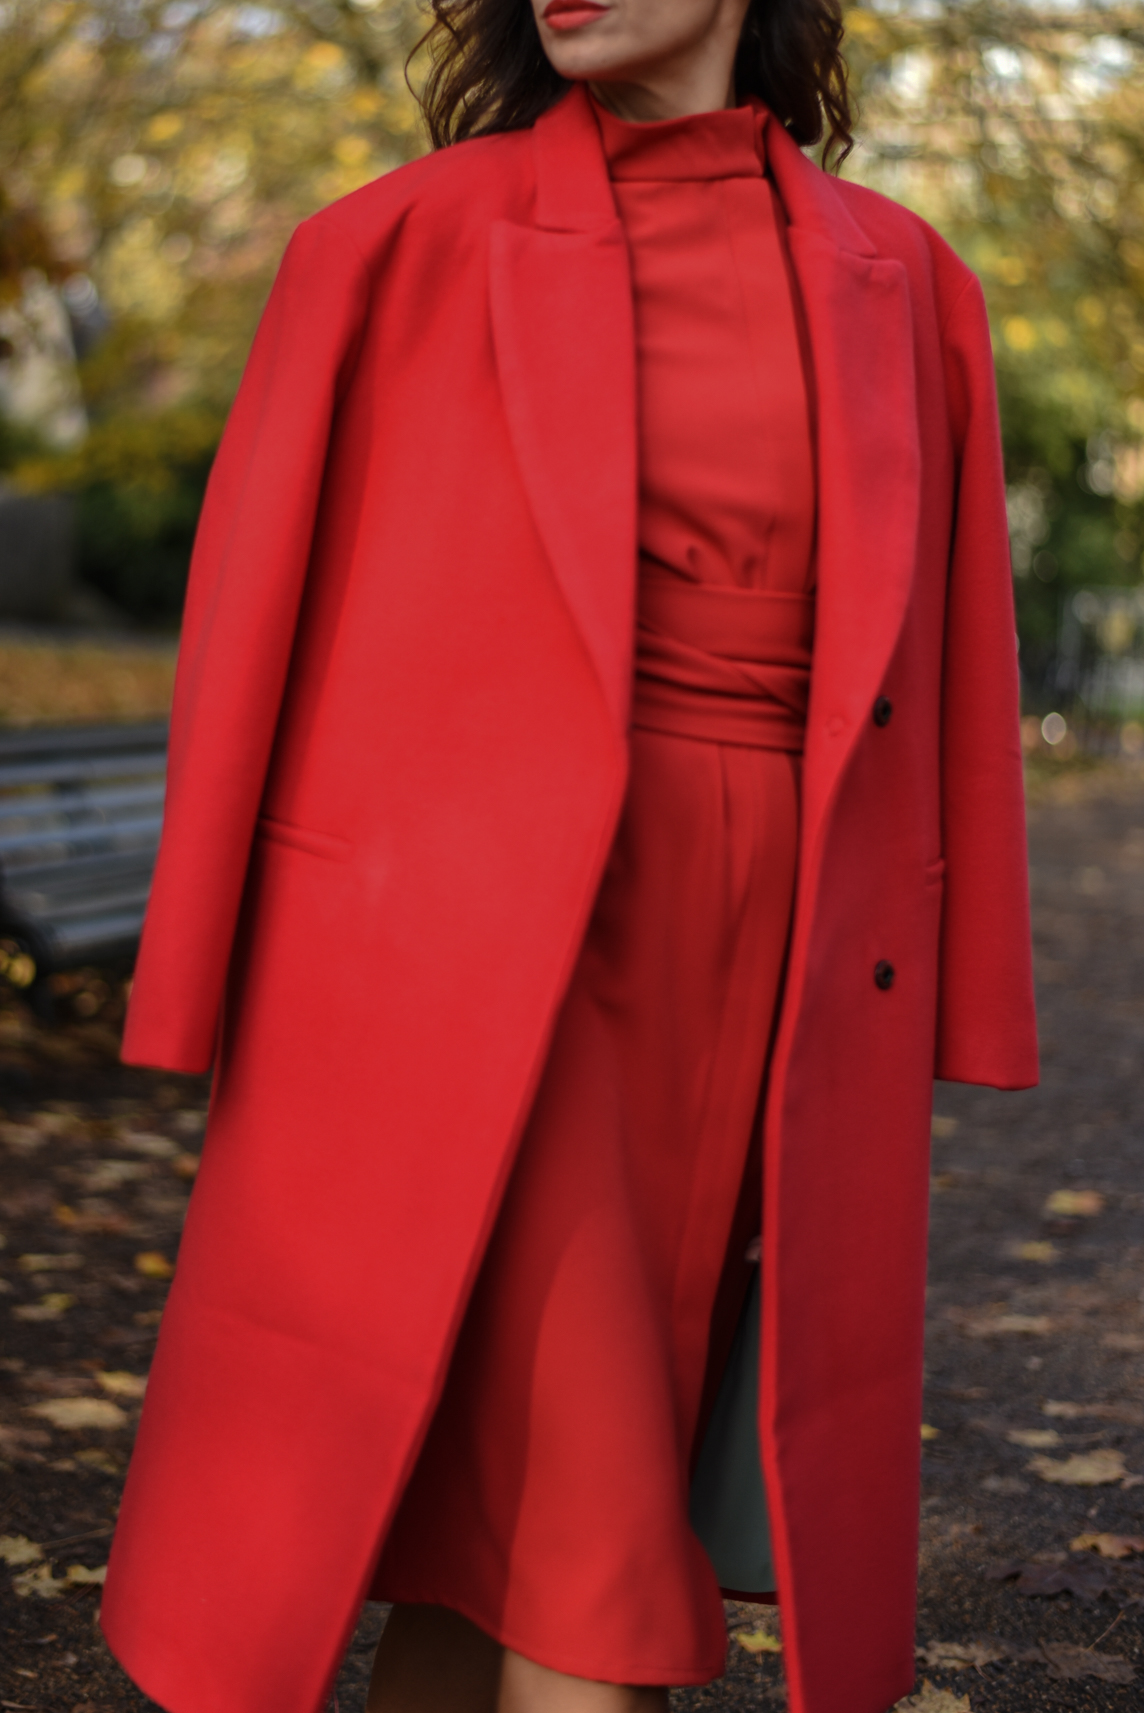 el-blog-de-silvia-invitada-perfecta-boda-abrigo-rojo-pintini